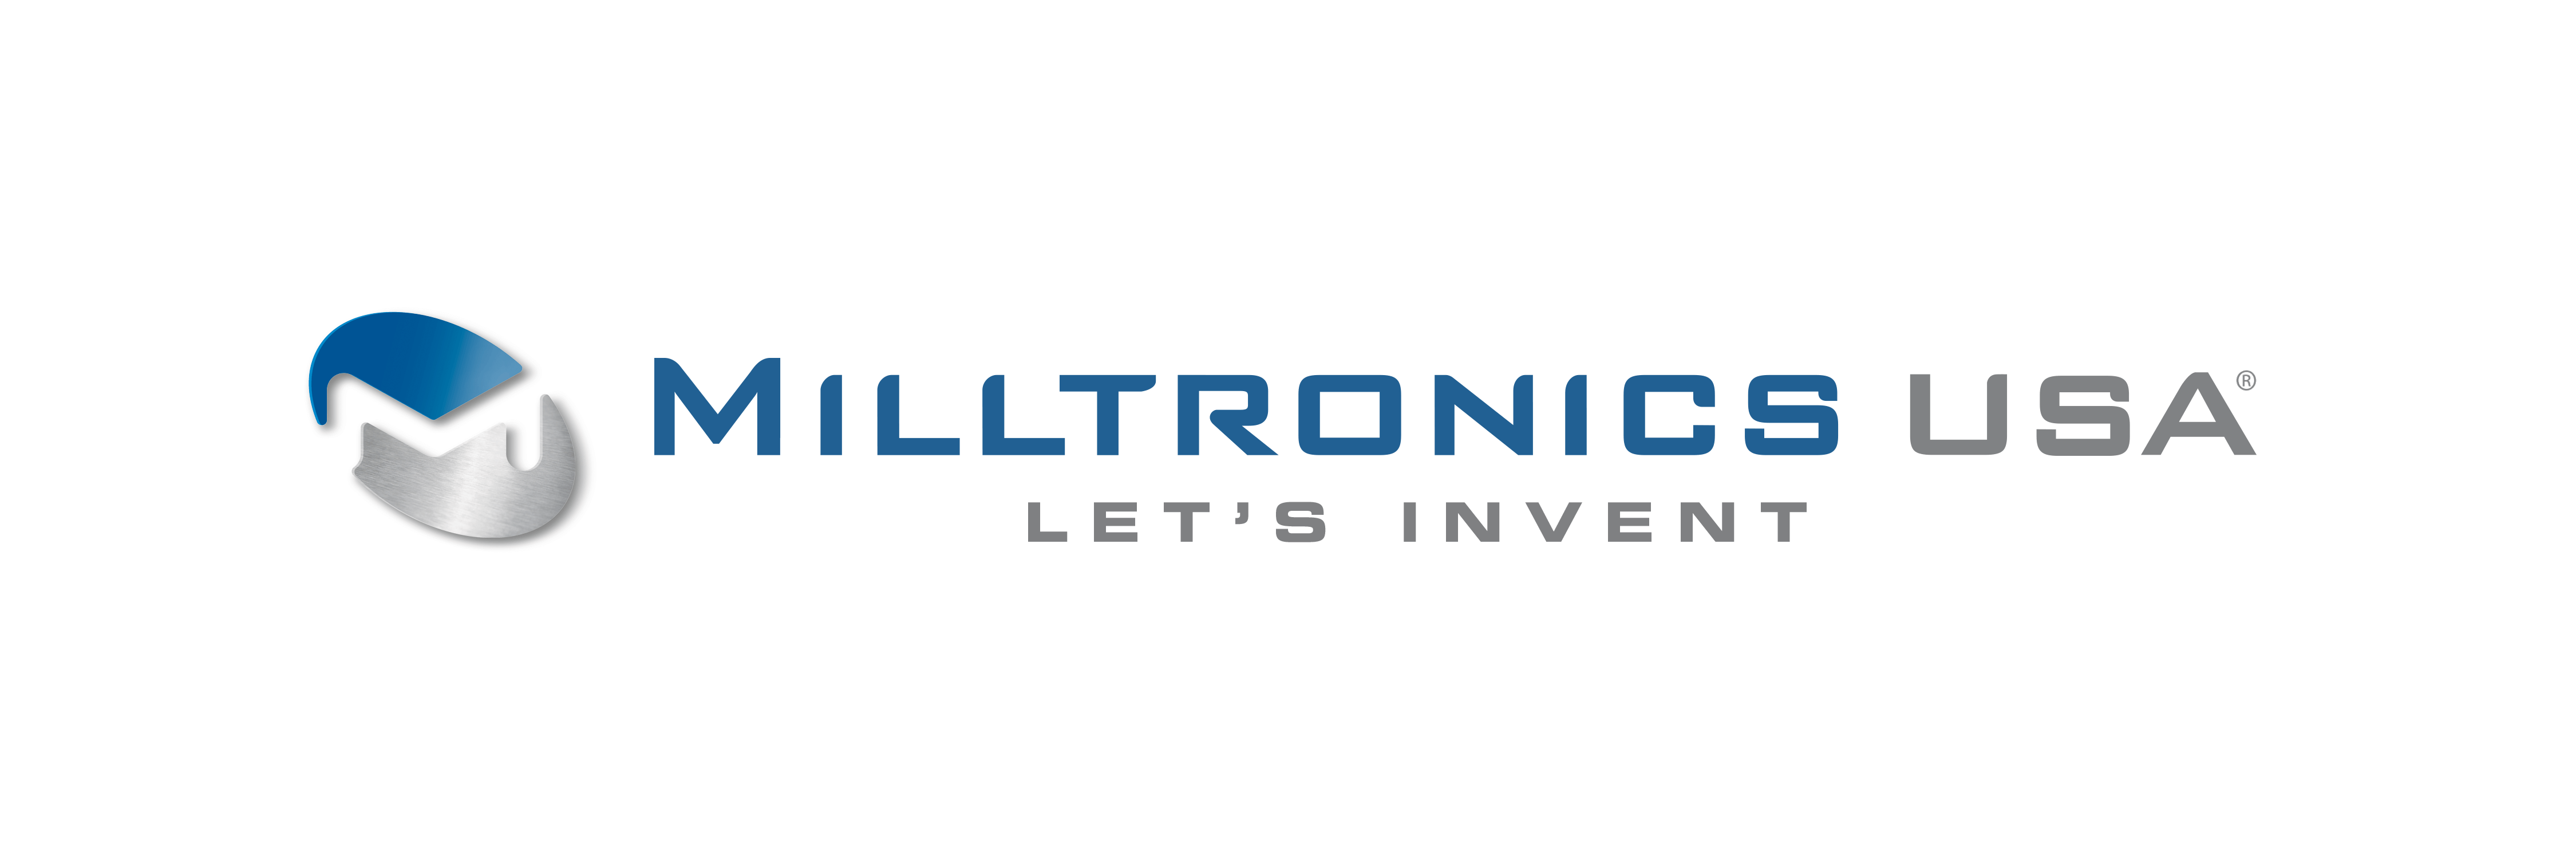 Milltronics Logo - Milltronics USA Logo. Milltronics USA's Invent